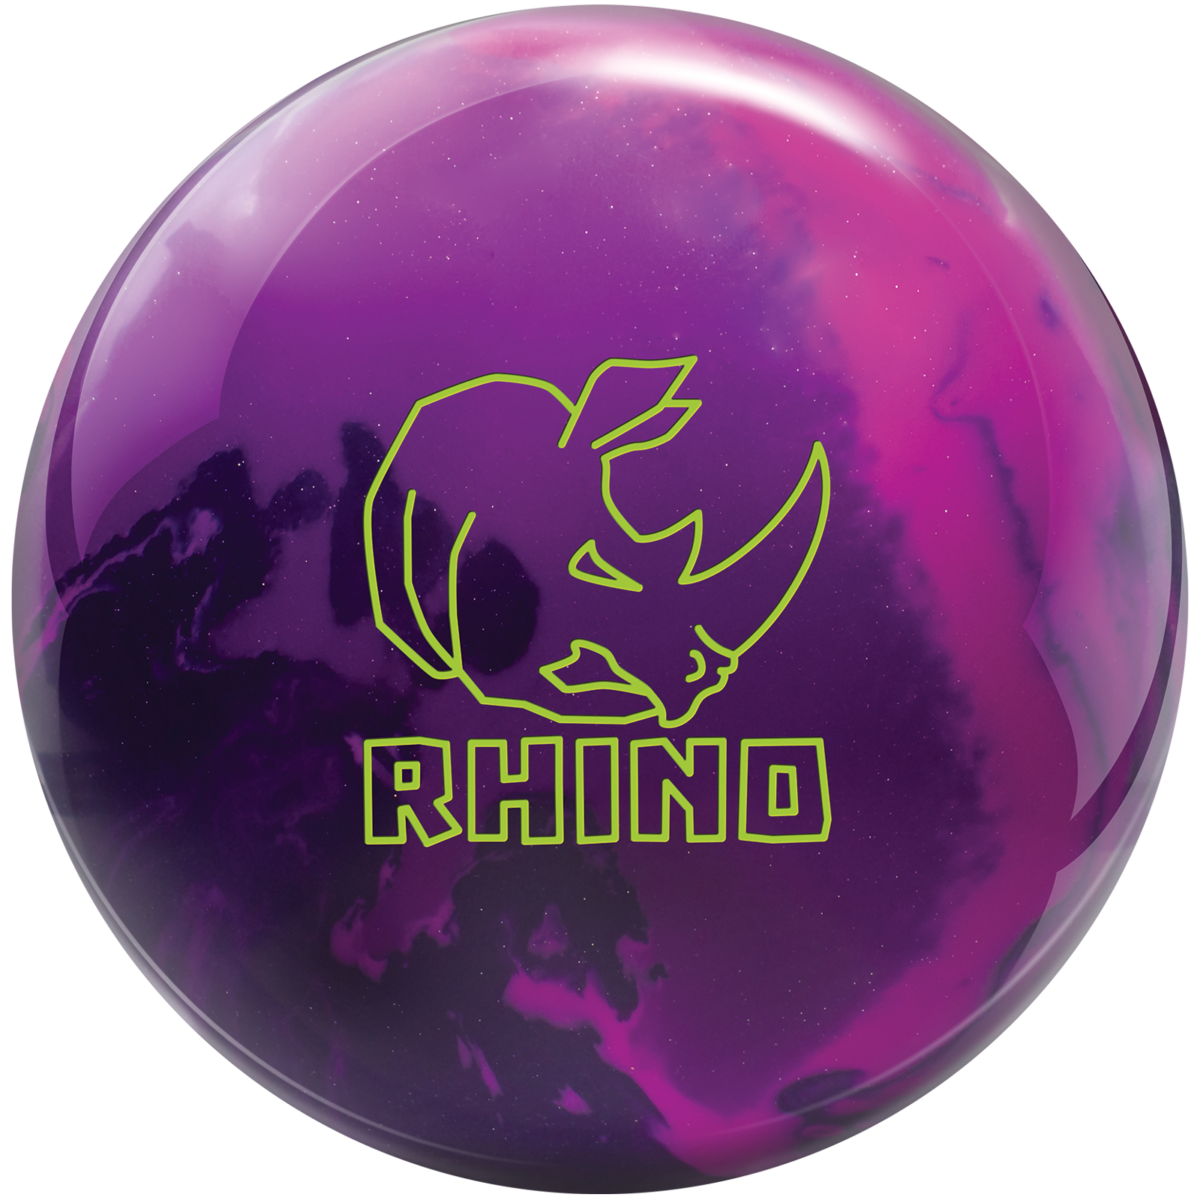 Brunswick Rhino Reactive PRE-DRILLED Bowling Ball Metallic Blue/Black 